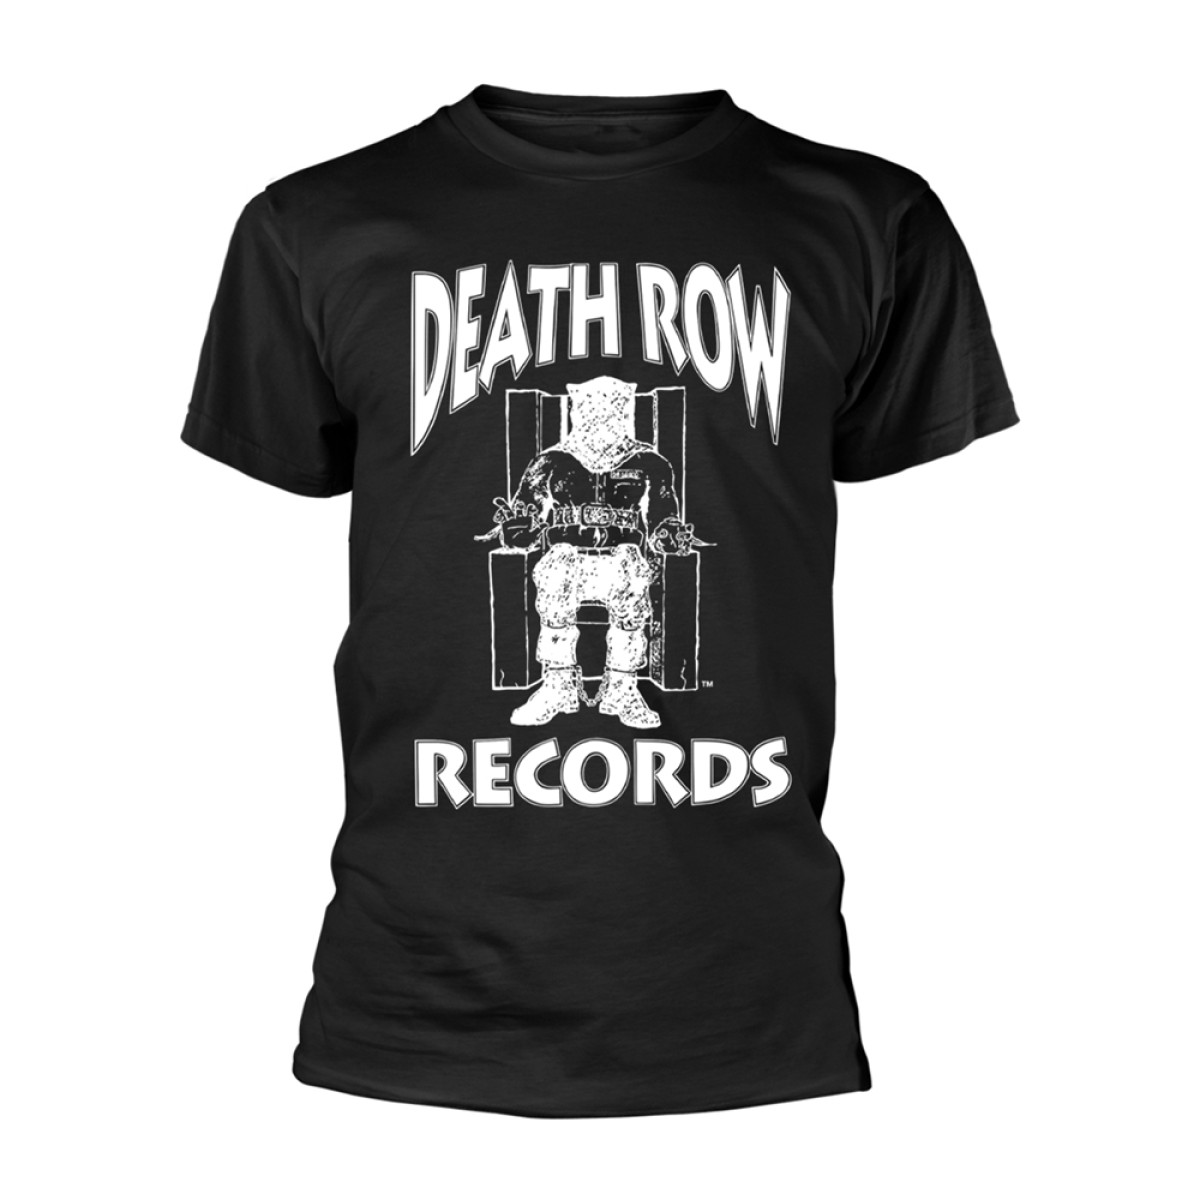 Txt records. Death Row records худи. Death Row records одежда. Death Row records цепочка. Кулон Death Row records.